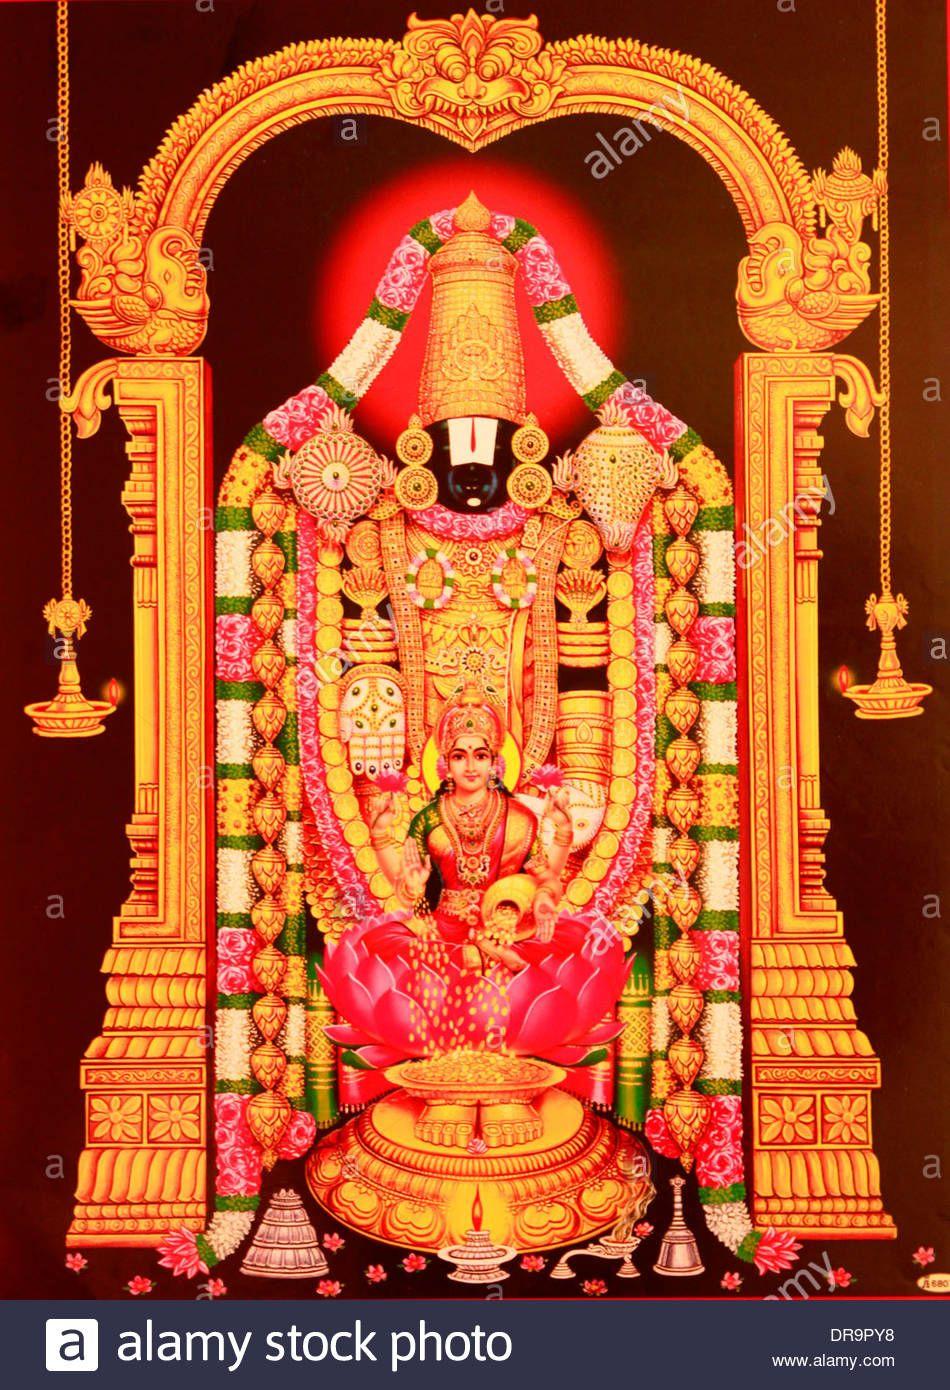 100+] Lord Balaji Wallpapers | Wallpapers.com